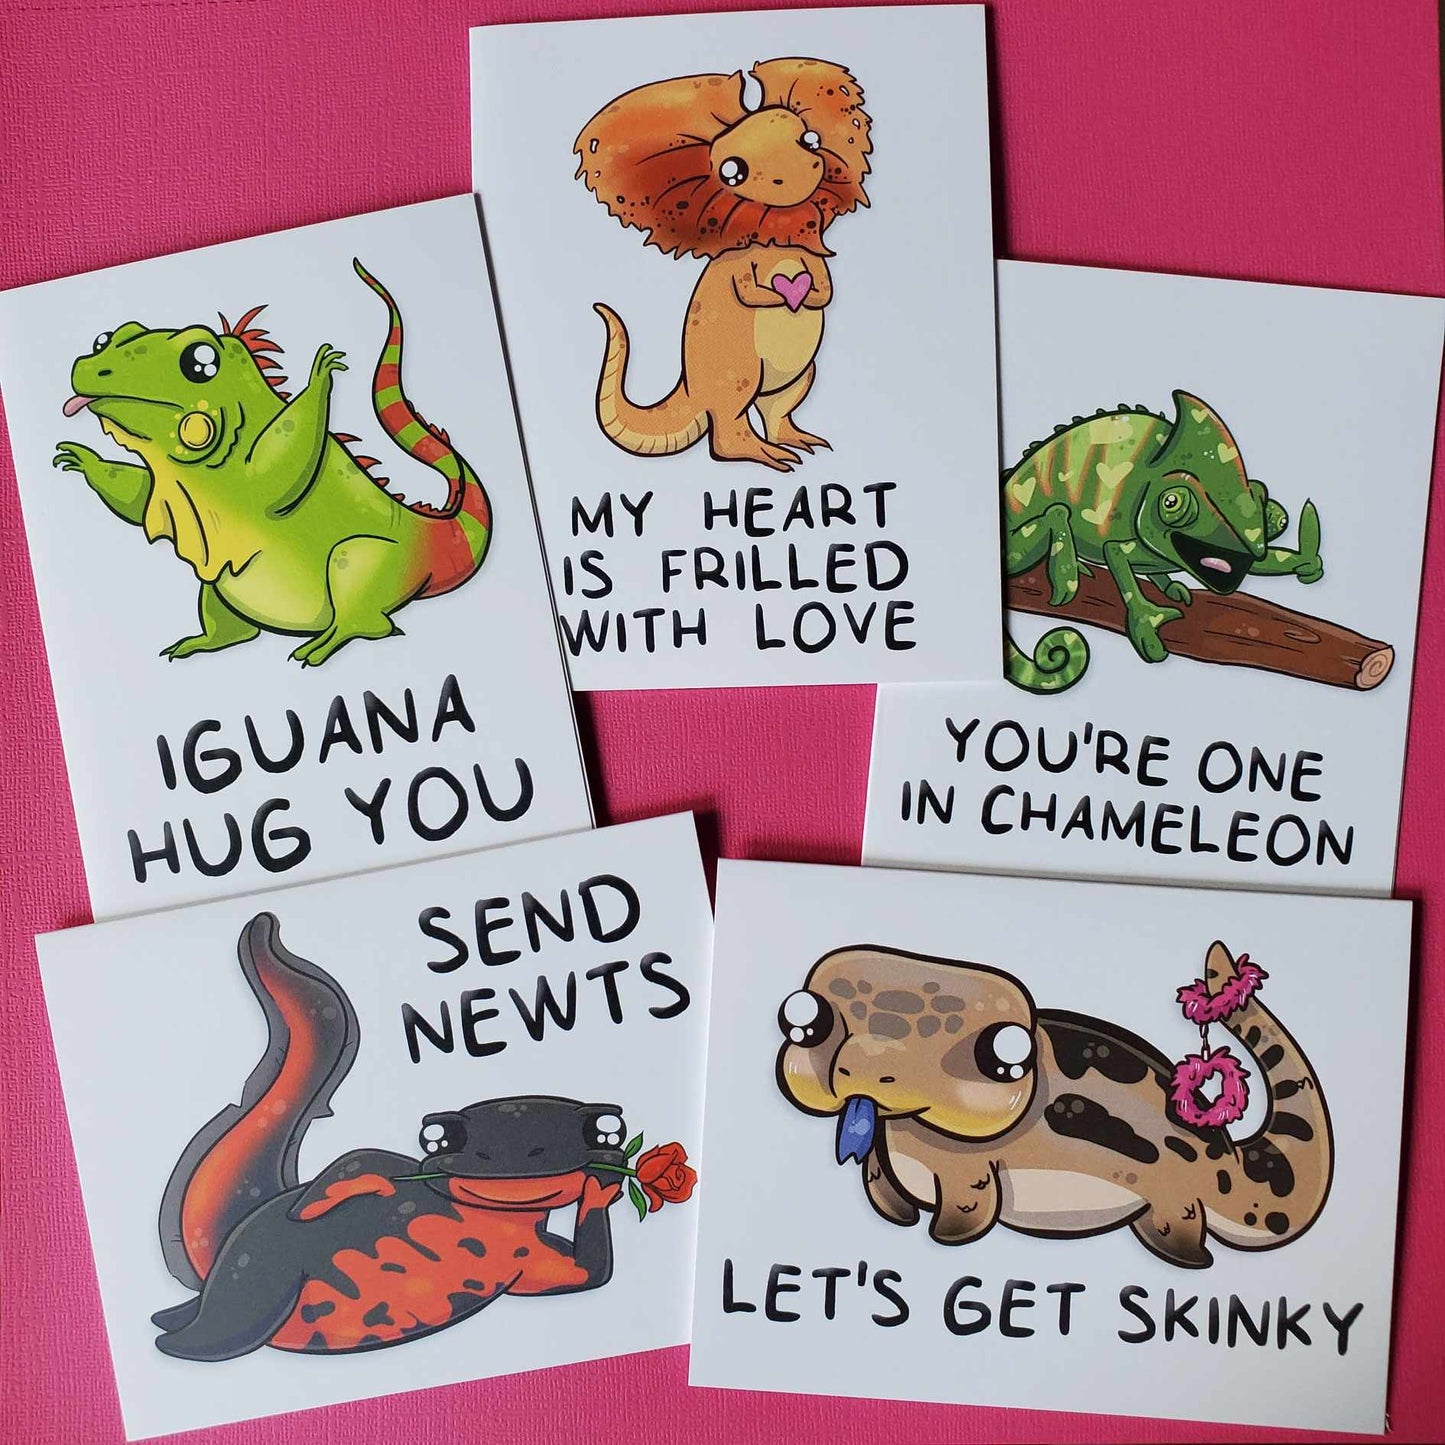 "Iguana Hug You" Greeting Card